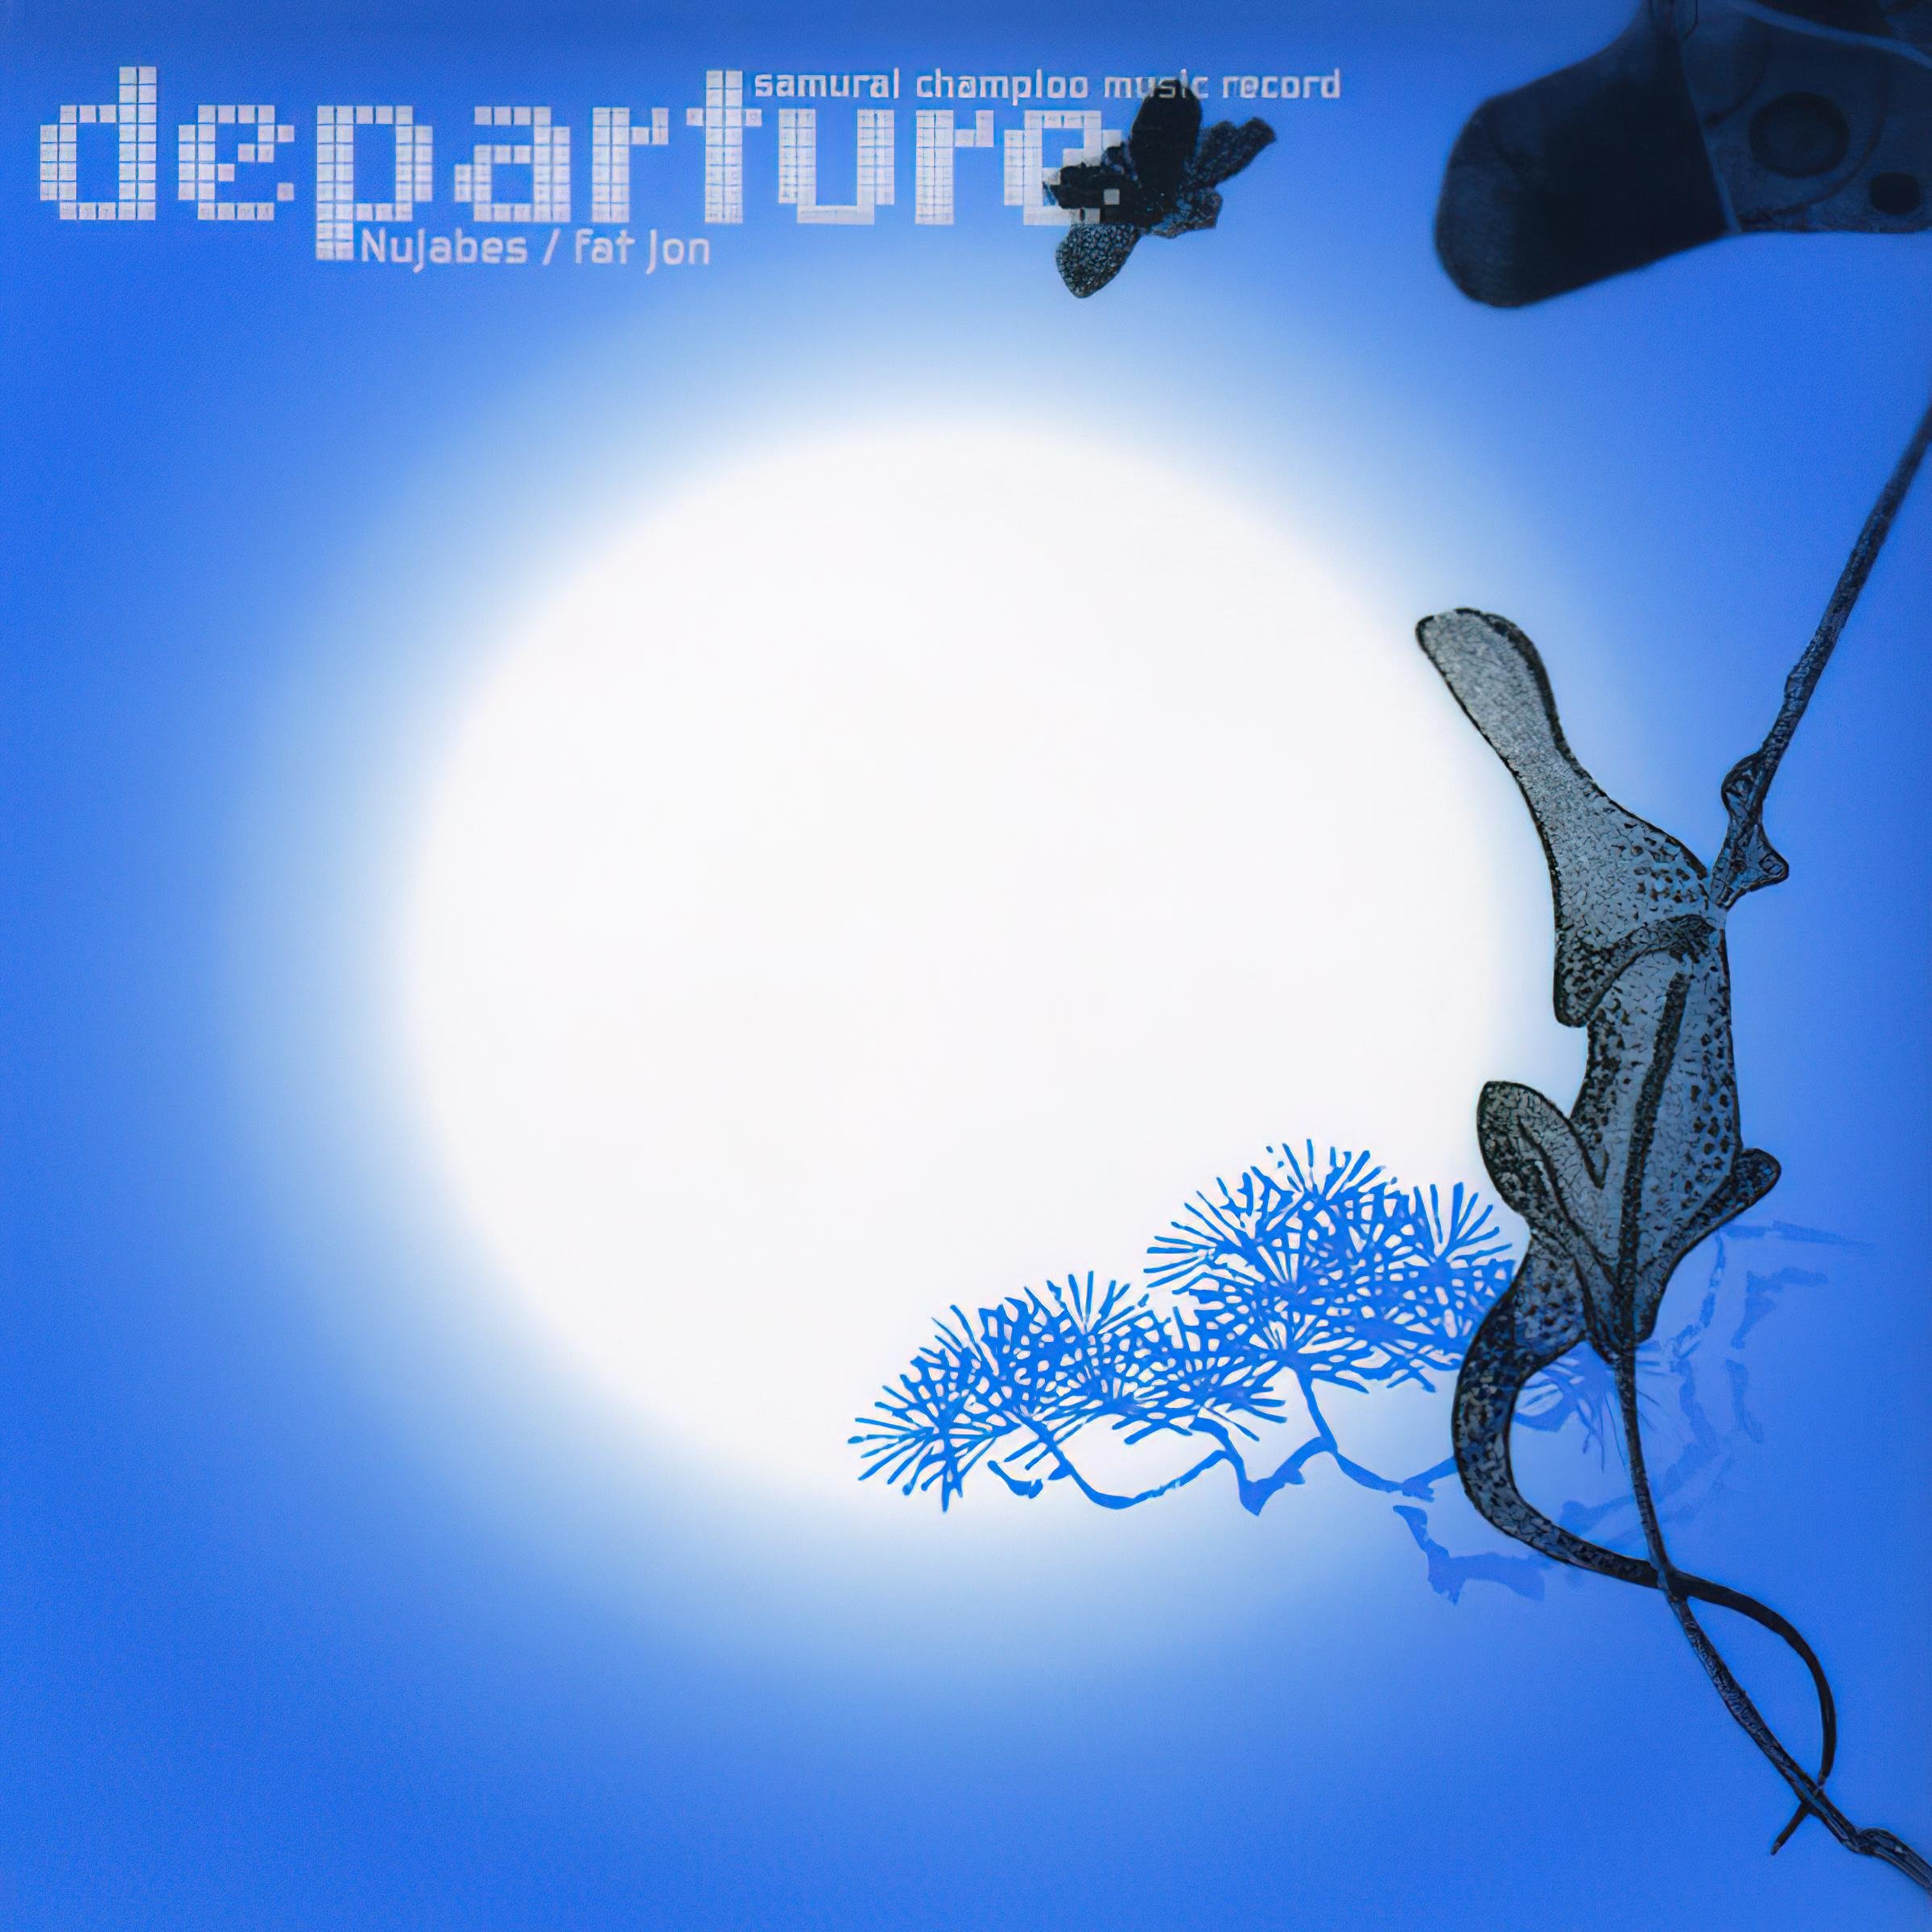 Samurai Champloo Music Record - Departure — Nujabes | Last.fm